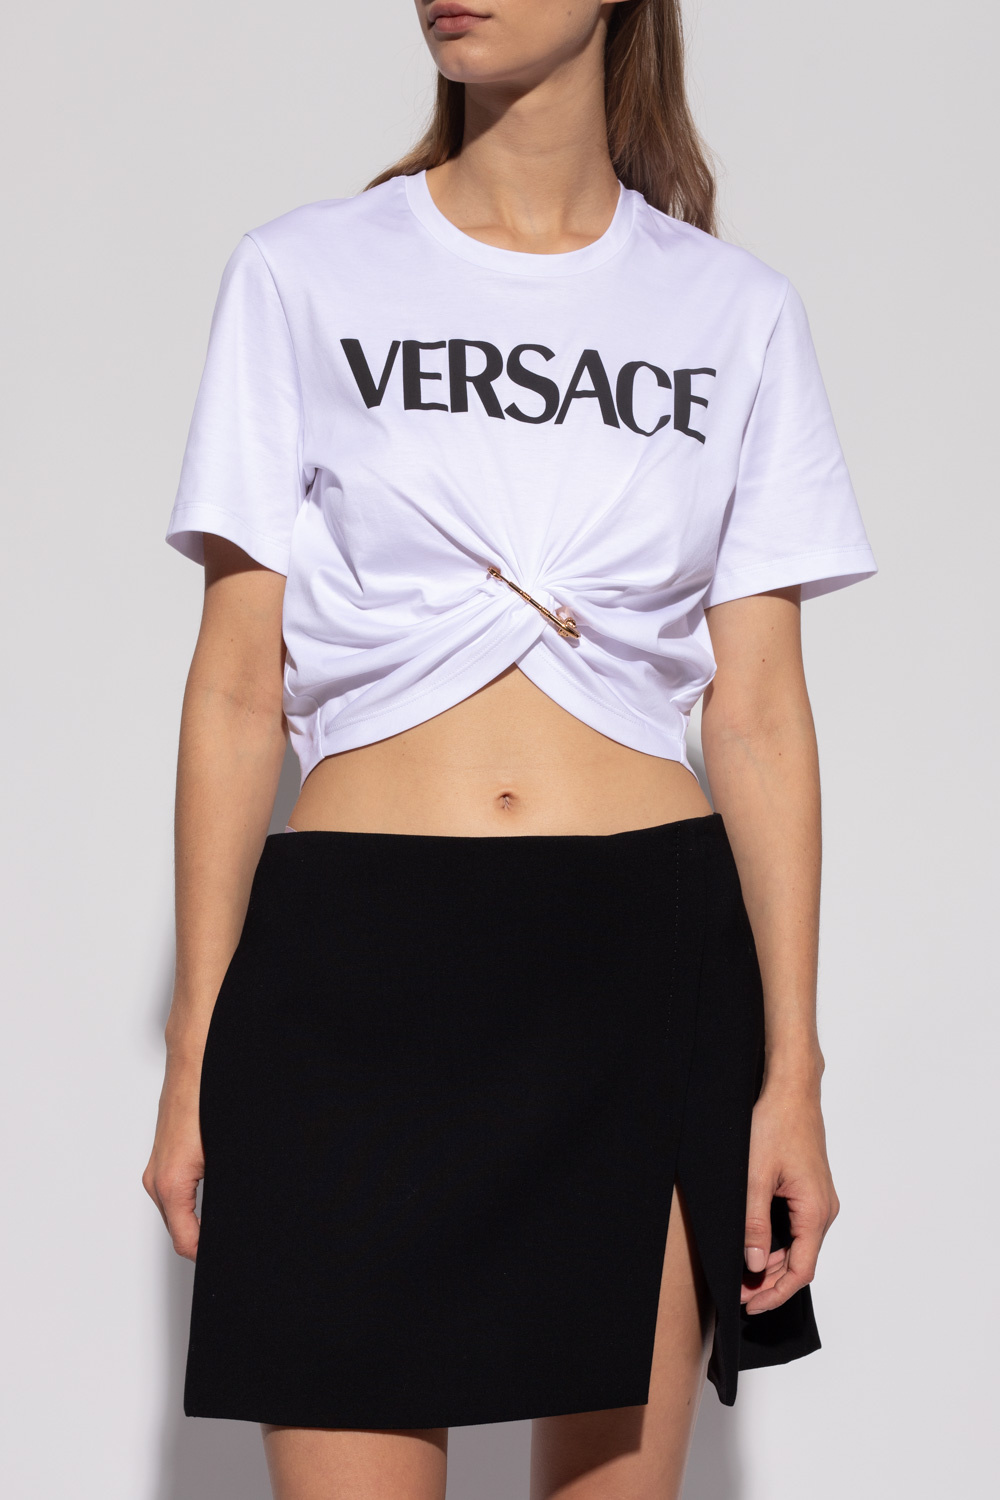 Versace womens puma sports clothing sport tights